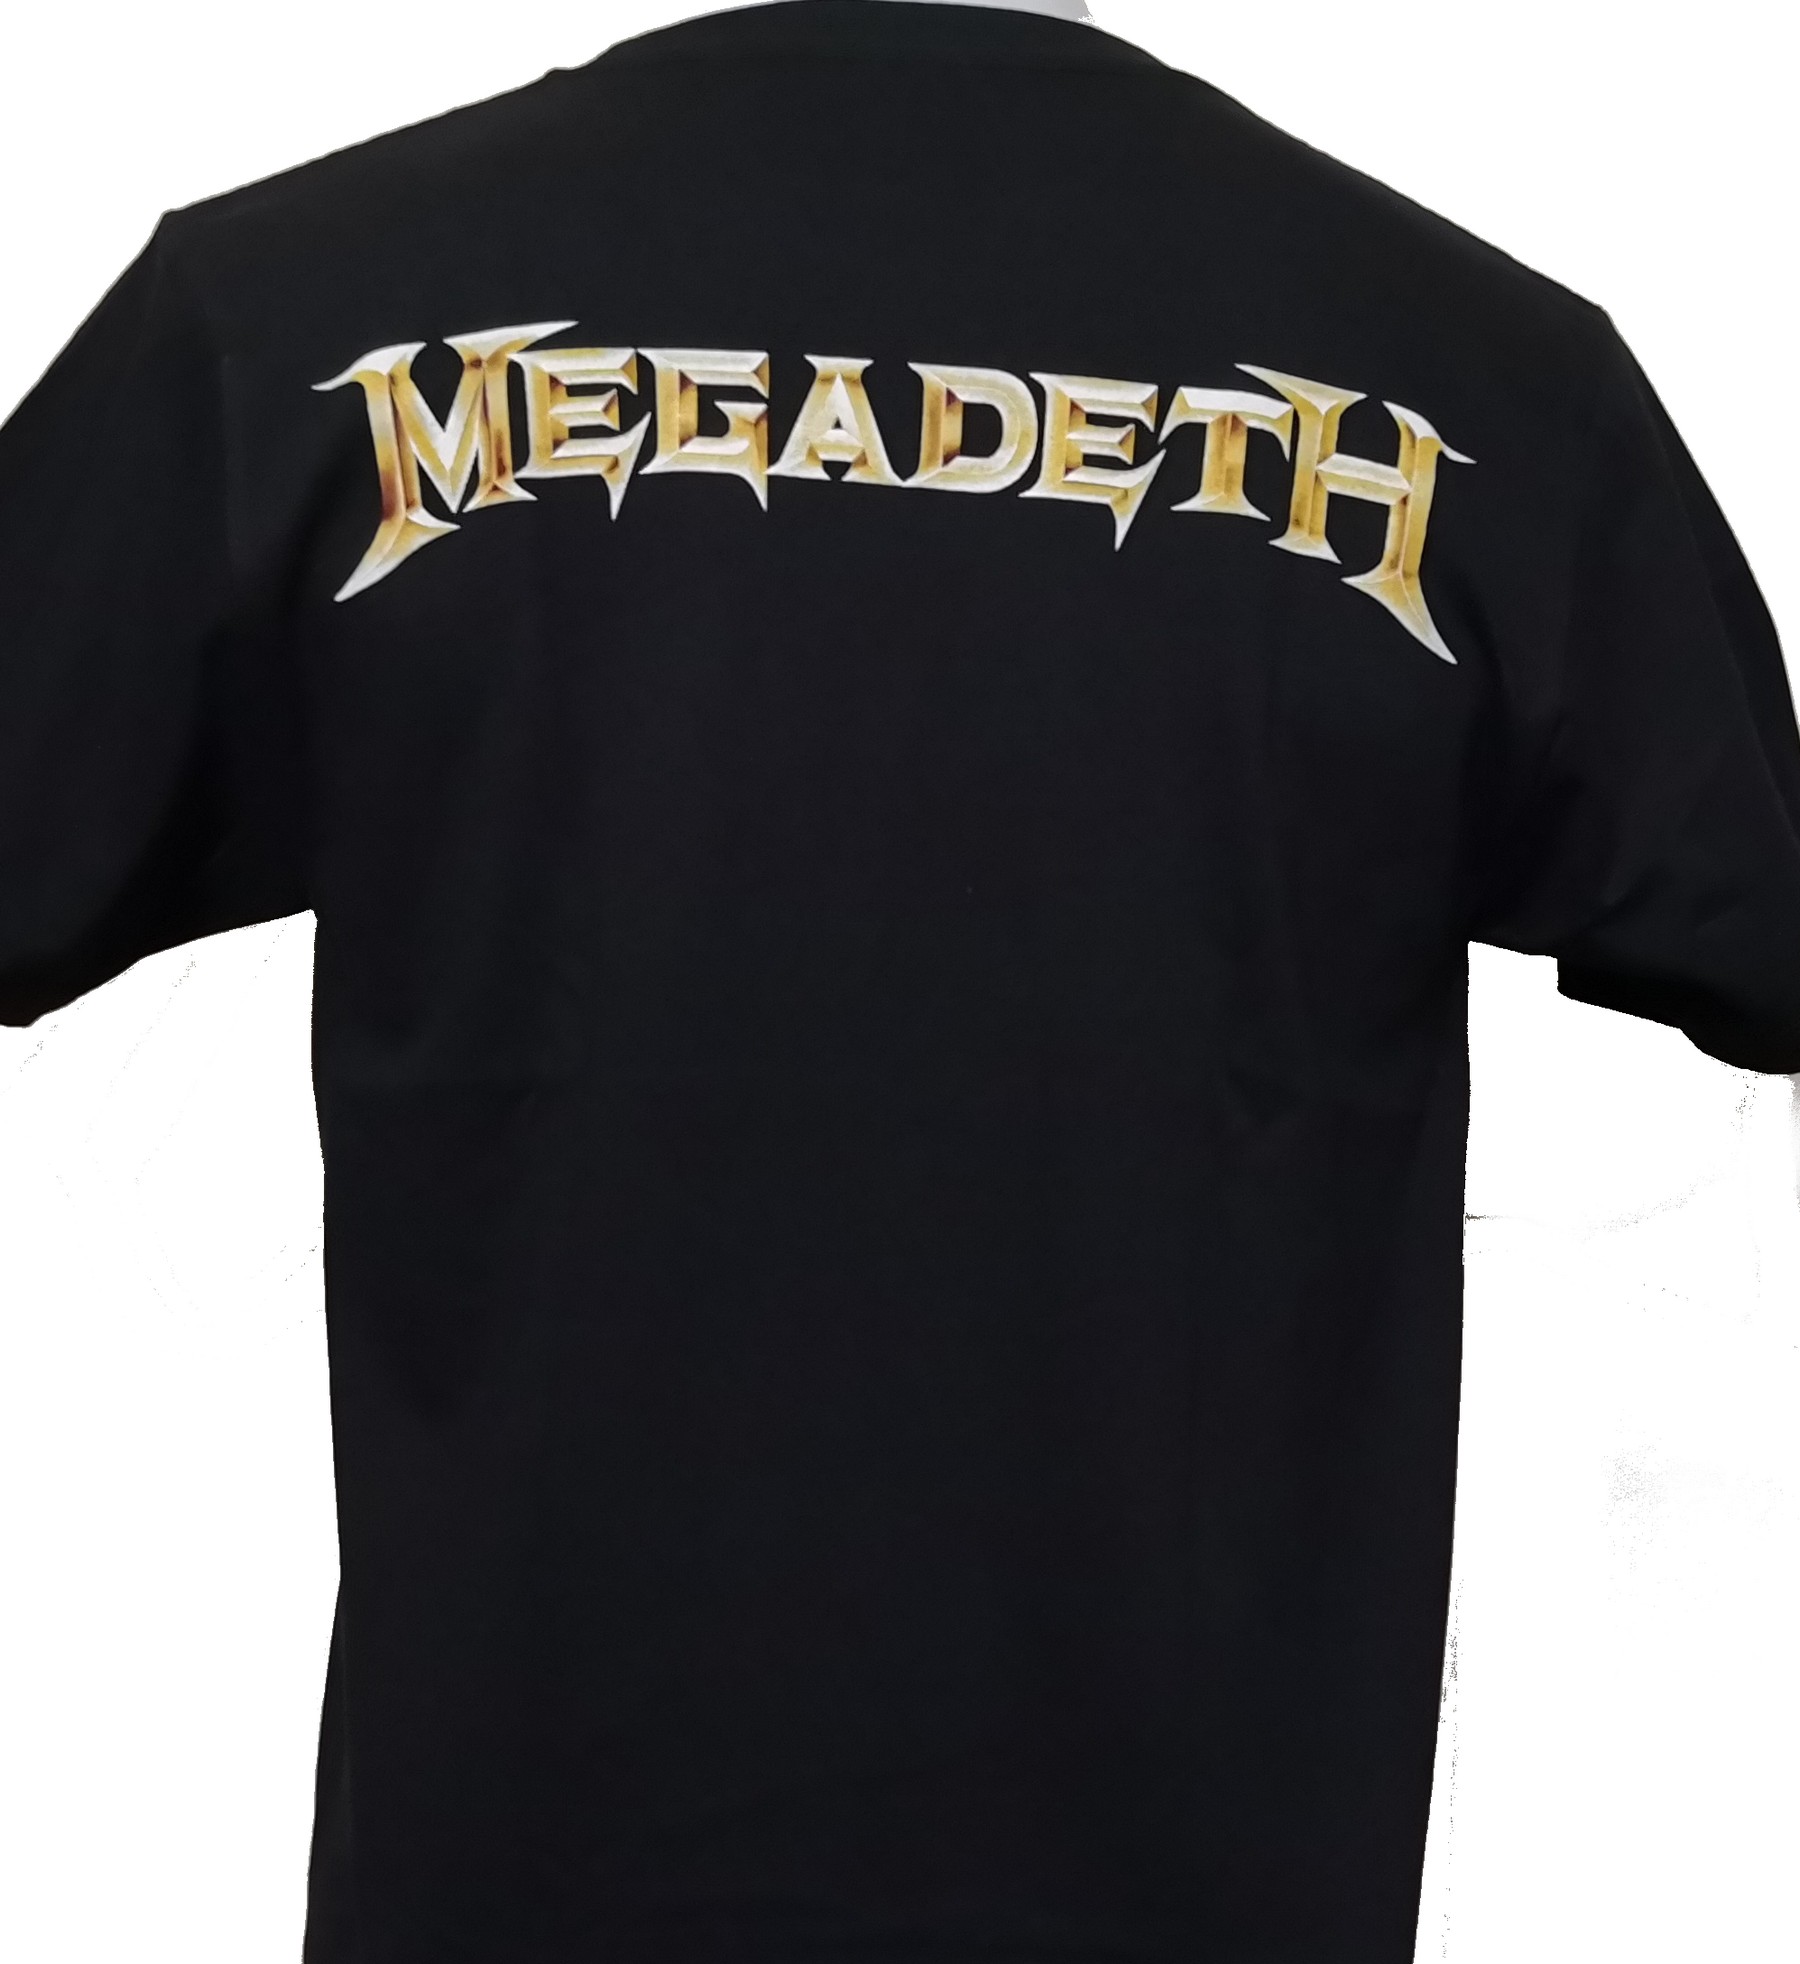 Megadeth t-shirt size L